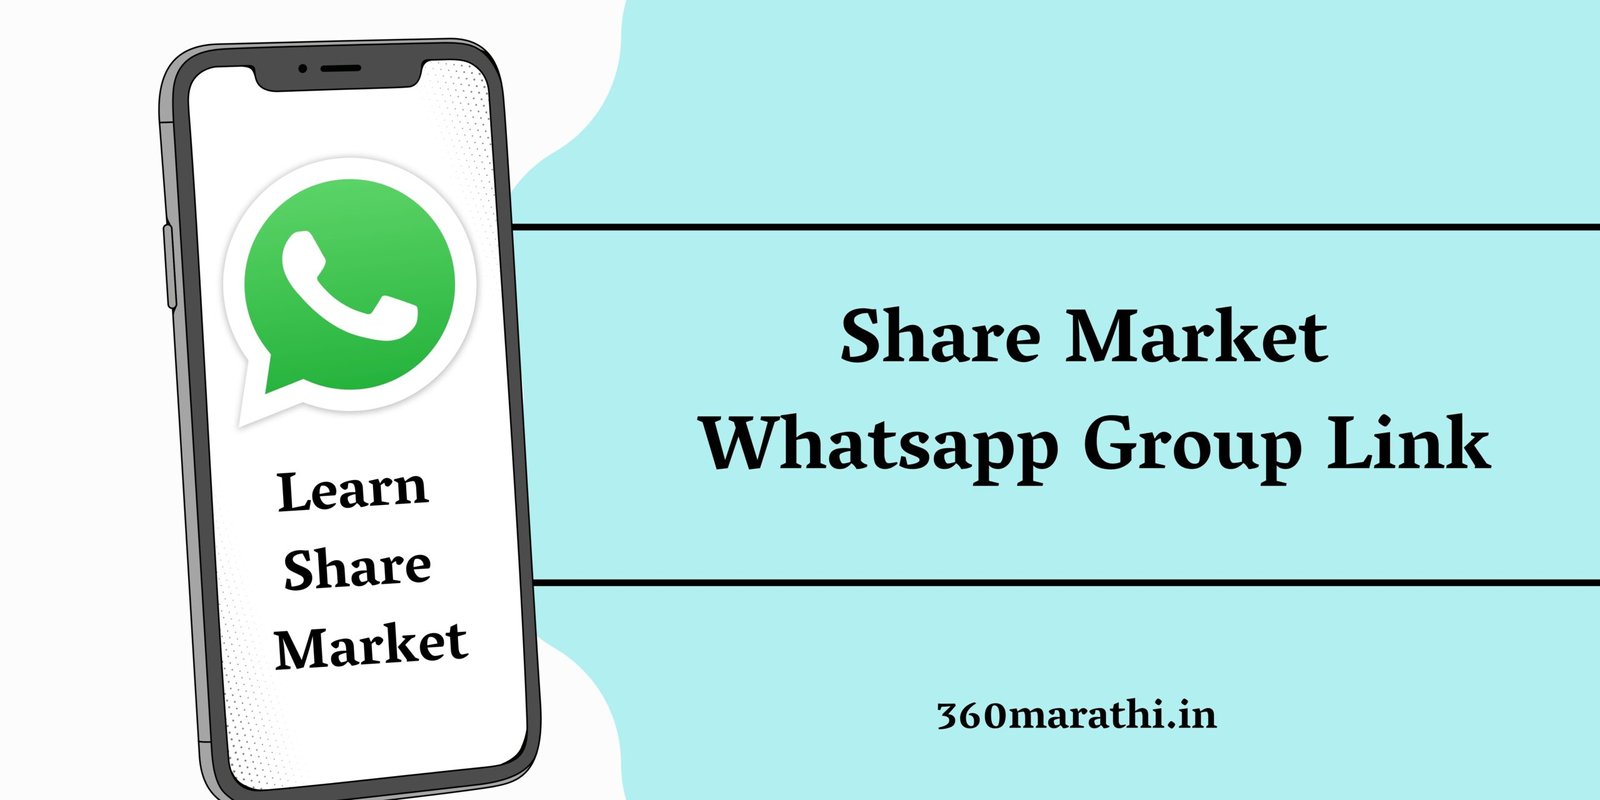 Share Market Whatsapp Group Link